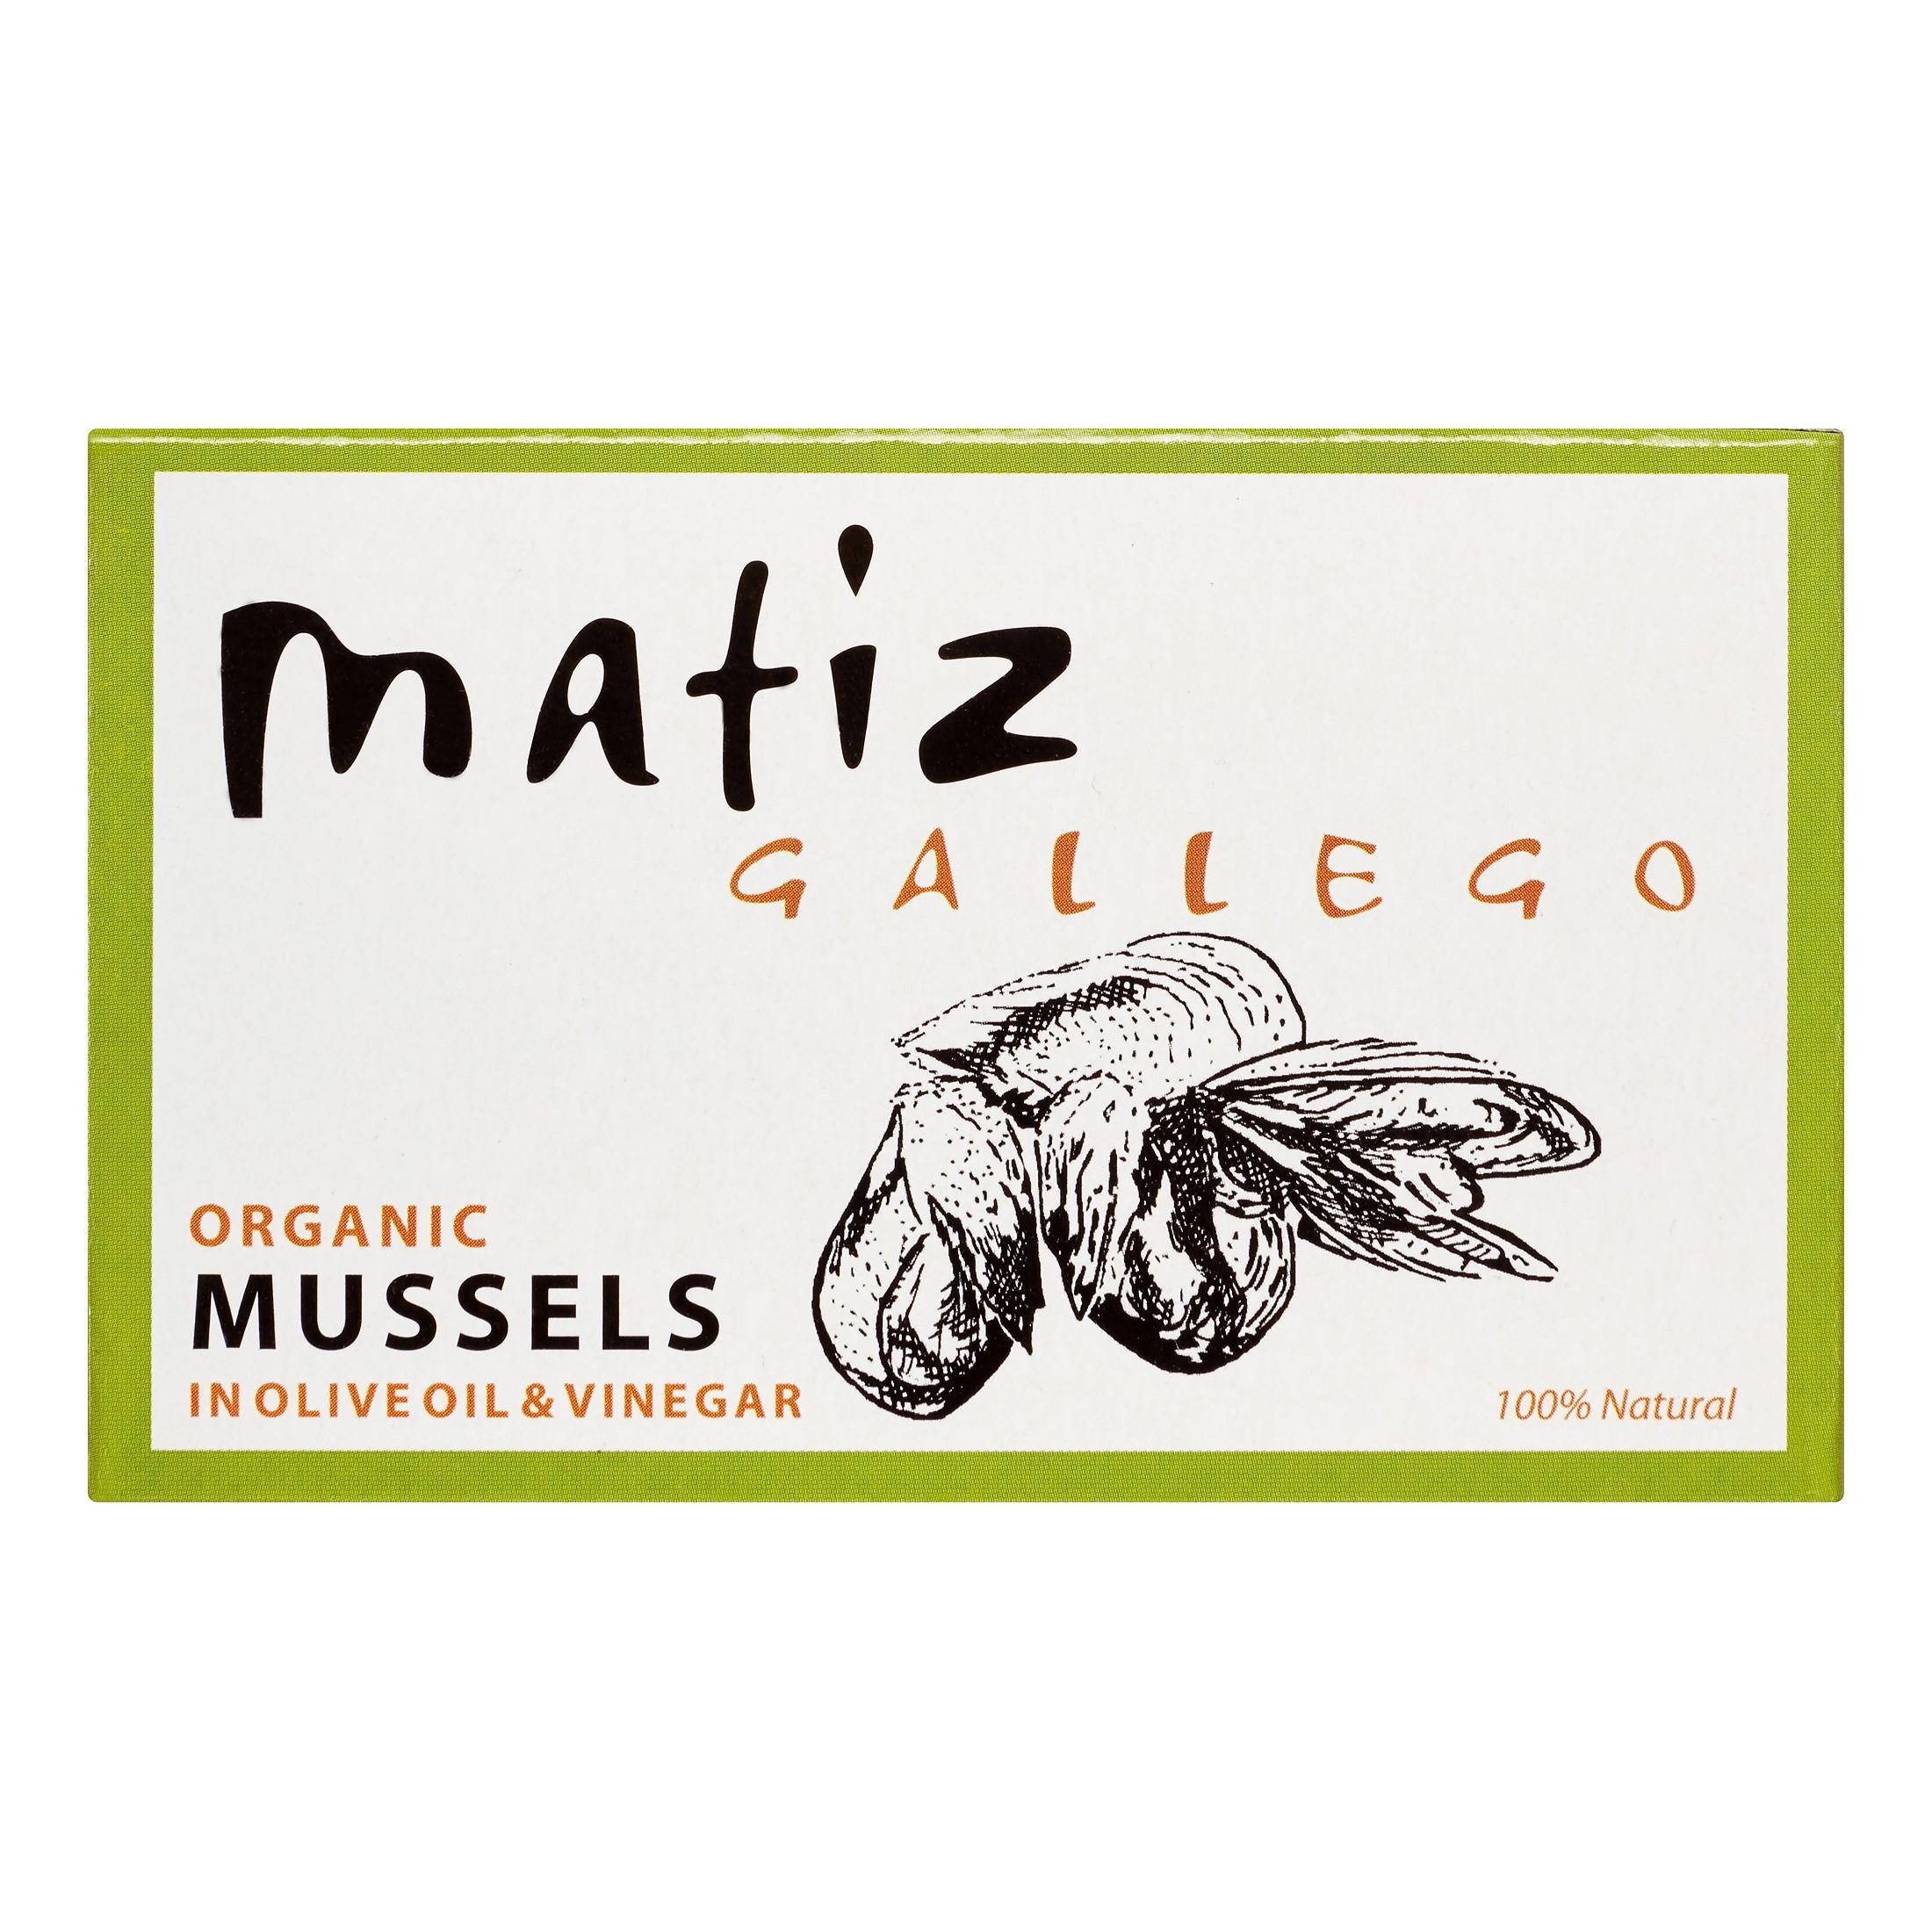 Matiz Gallego Organic Mussels in Olive Oil & Vinegar